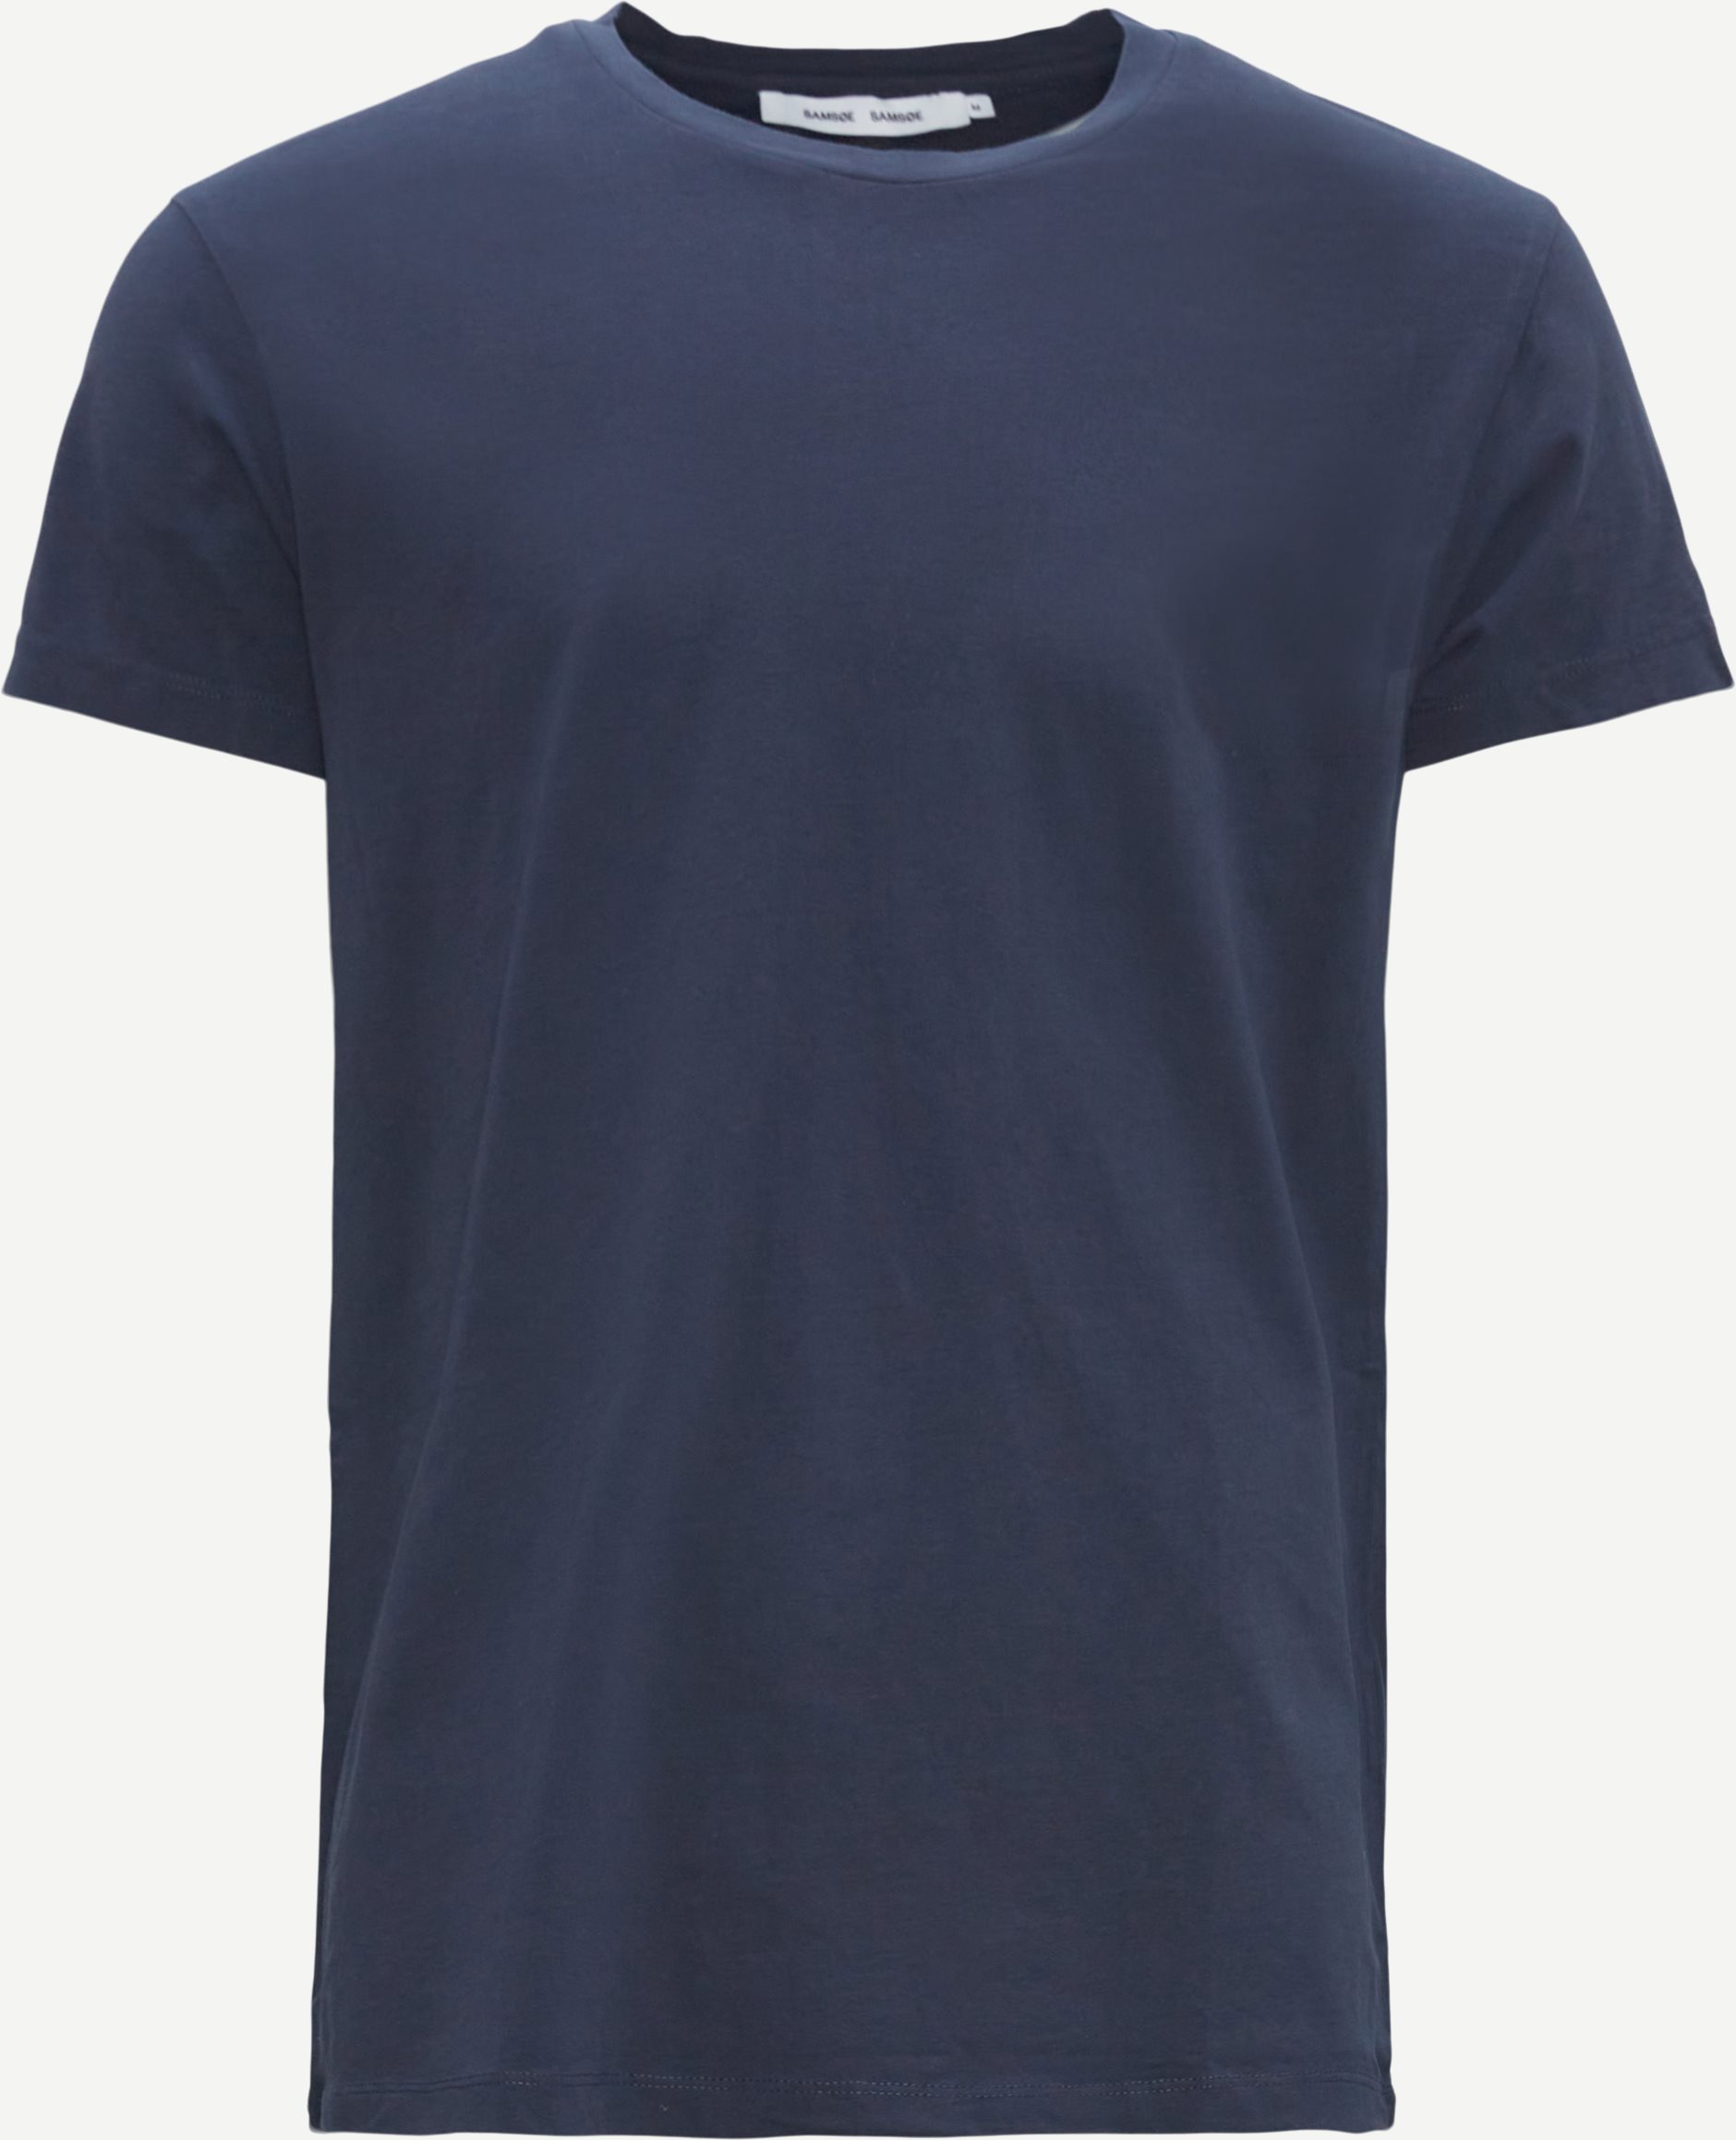 Samsøe Samsøe T-shirts KRONOS O-NECK SS 273 Blue